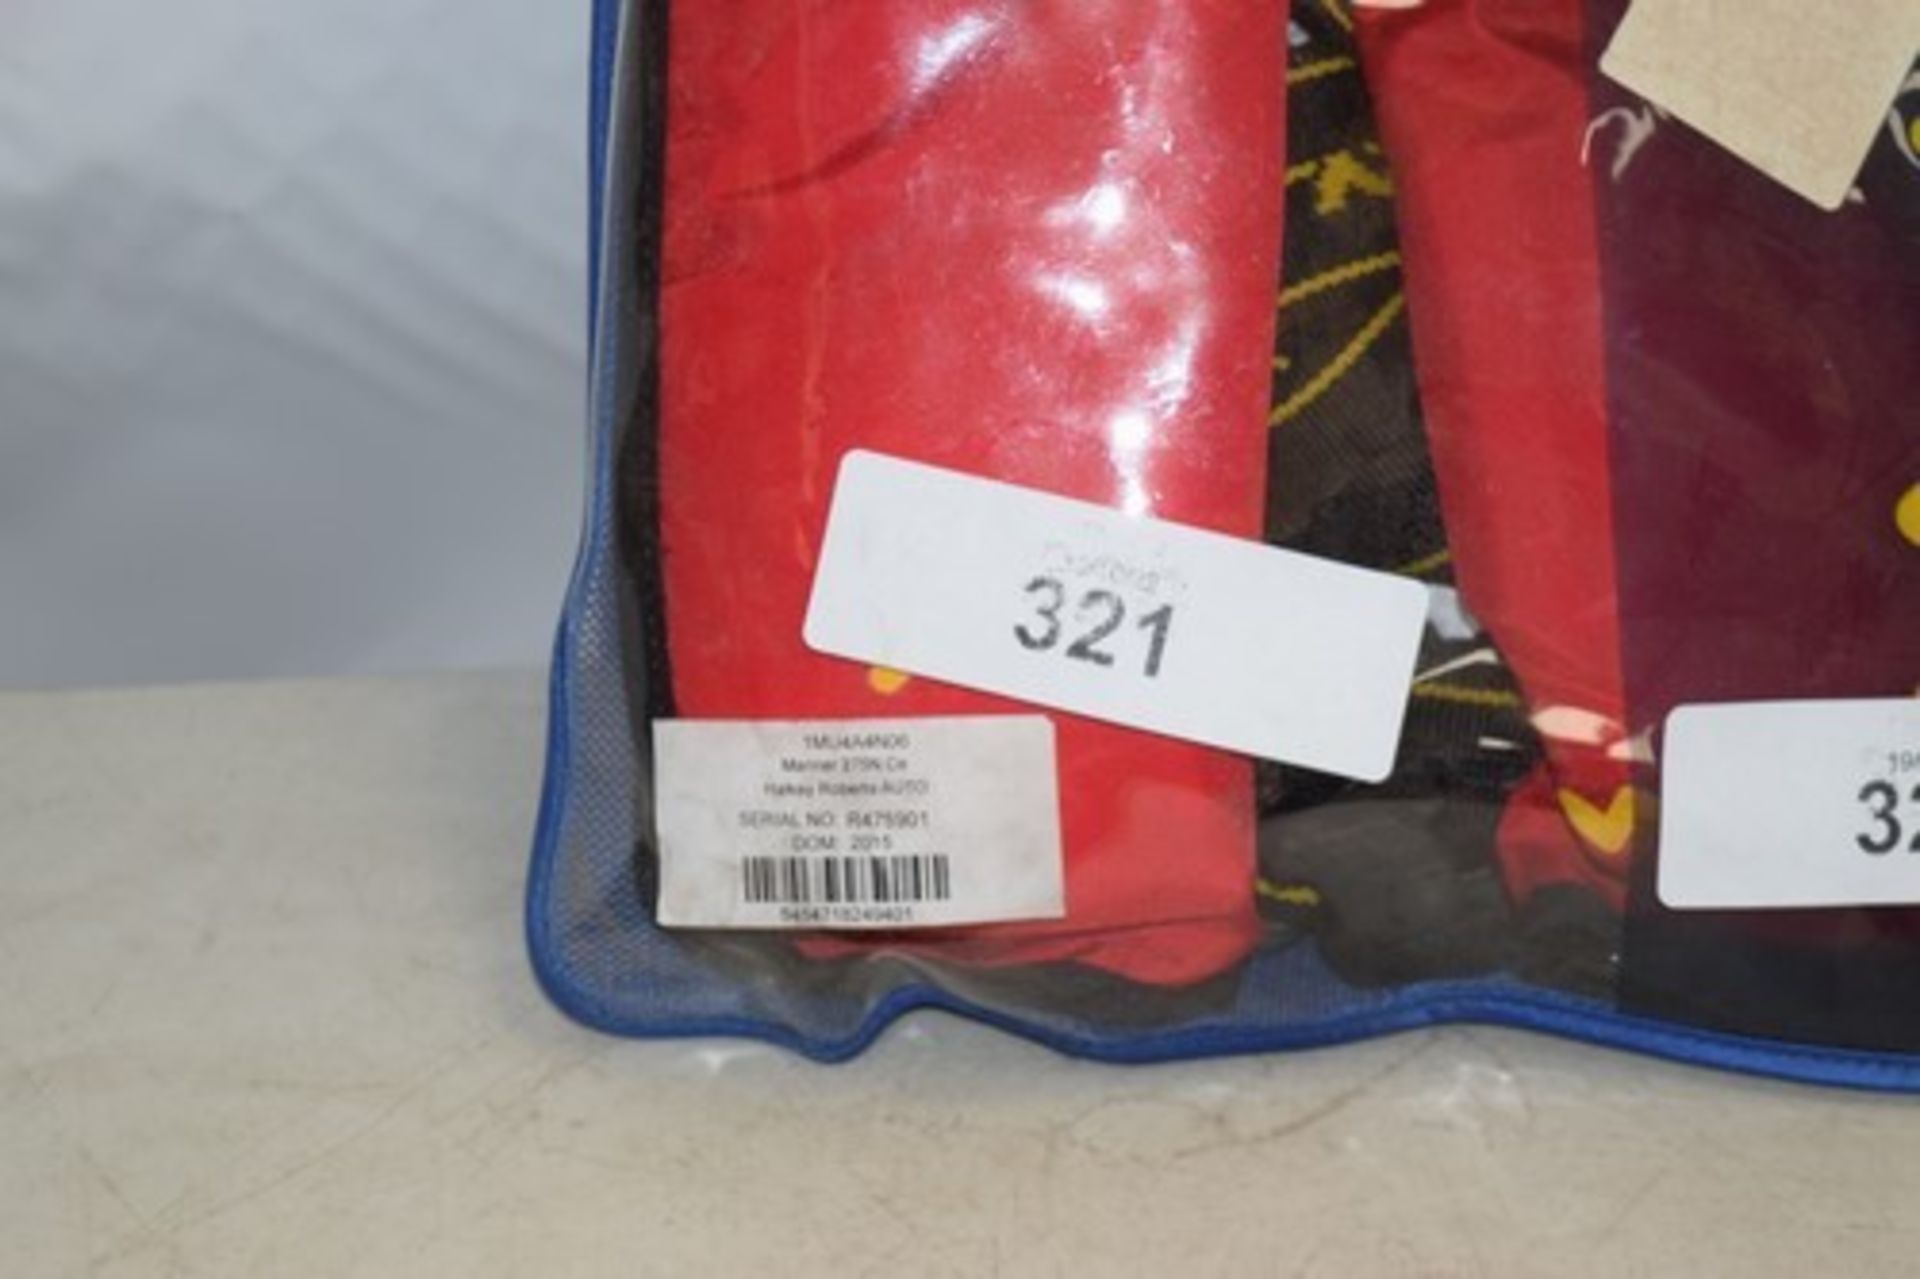 1 x Mullion Mariner 275N life jacket - New in pack (ES15) - Image 2 of 2